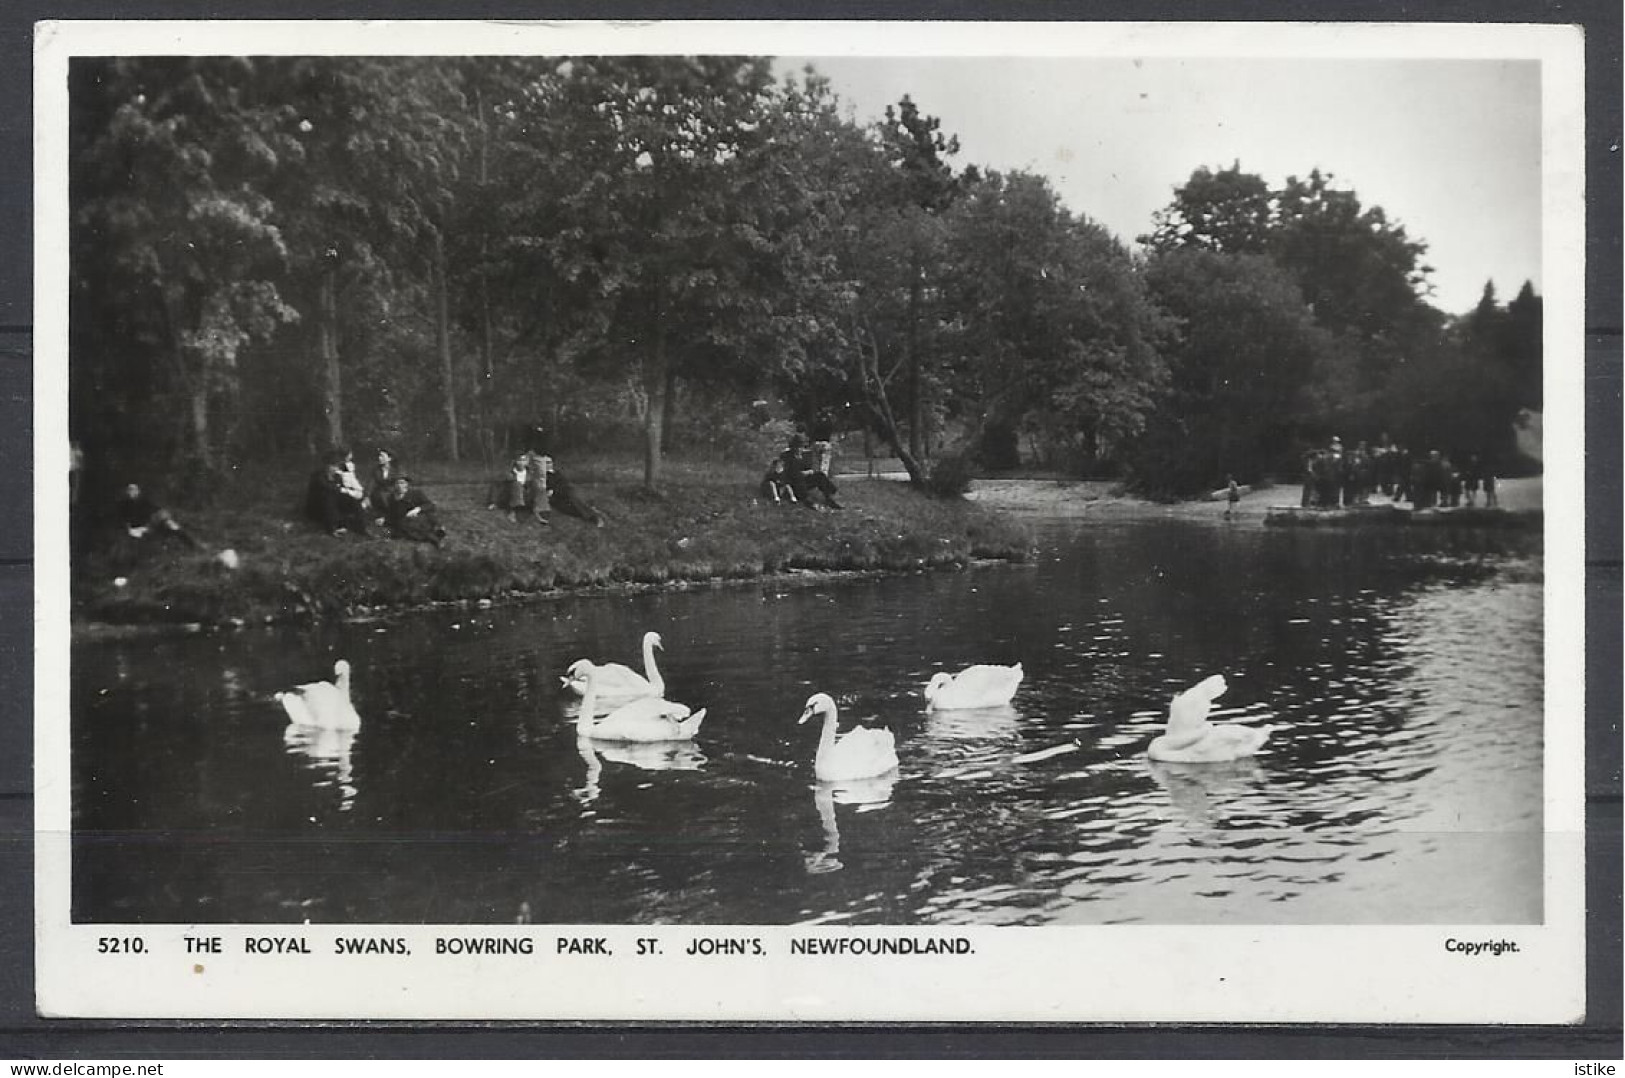 The Royal Swans, Bowring Park, St. John's, Newfoundland, Canada, 1957. - Vögel